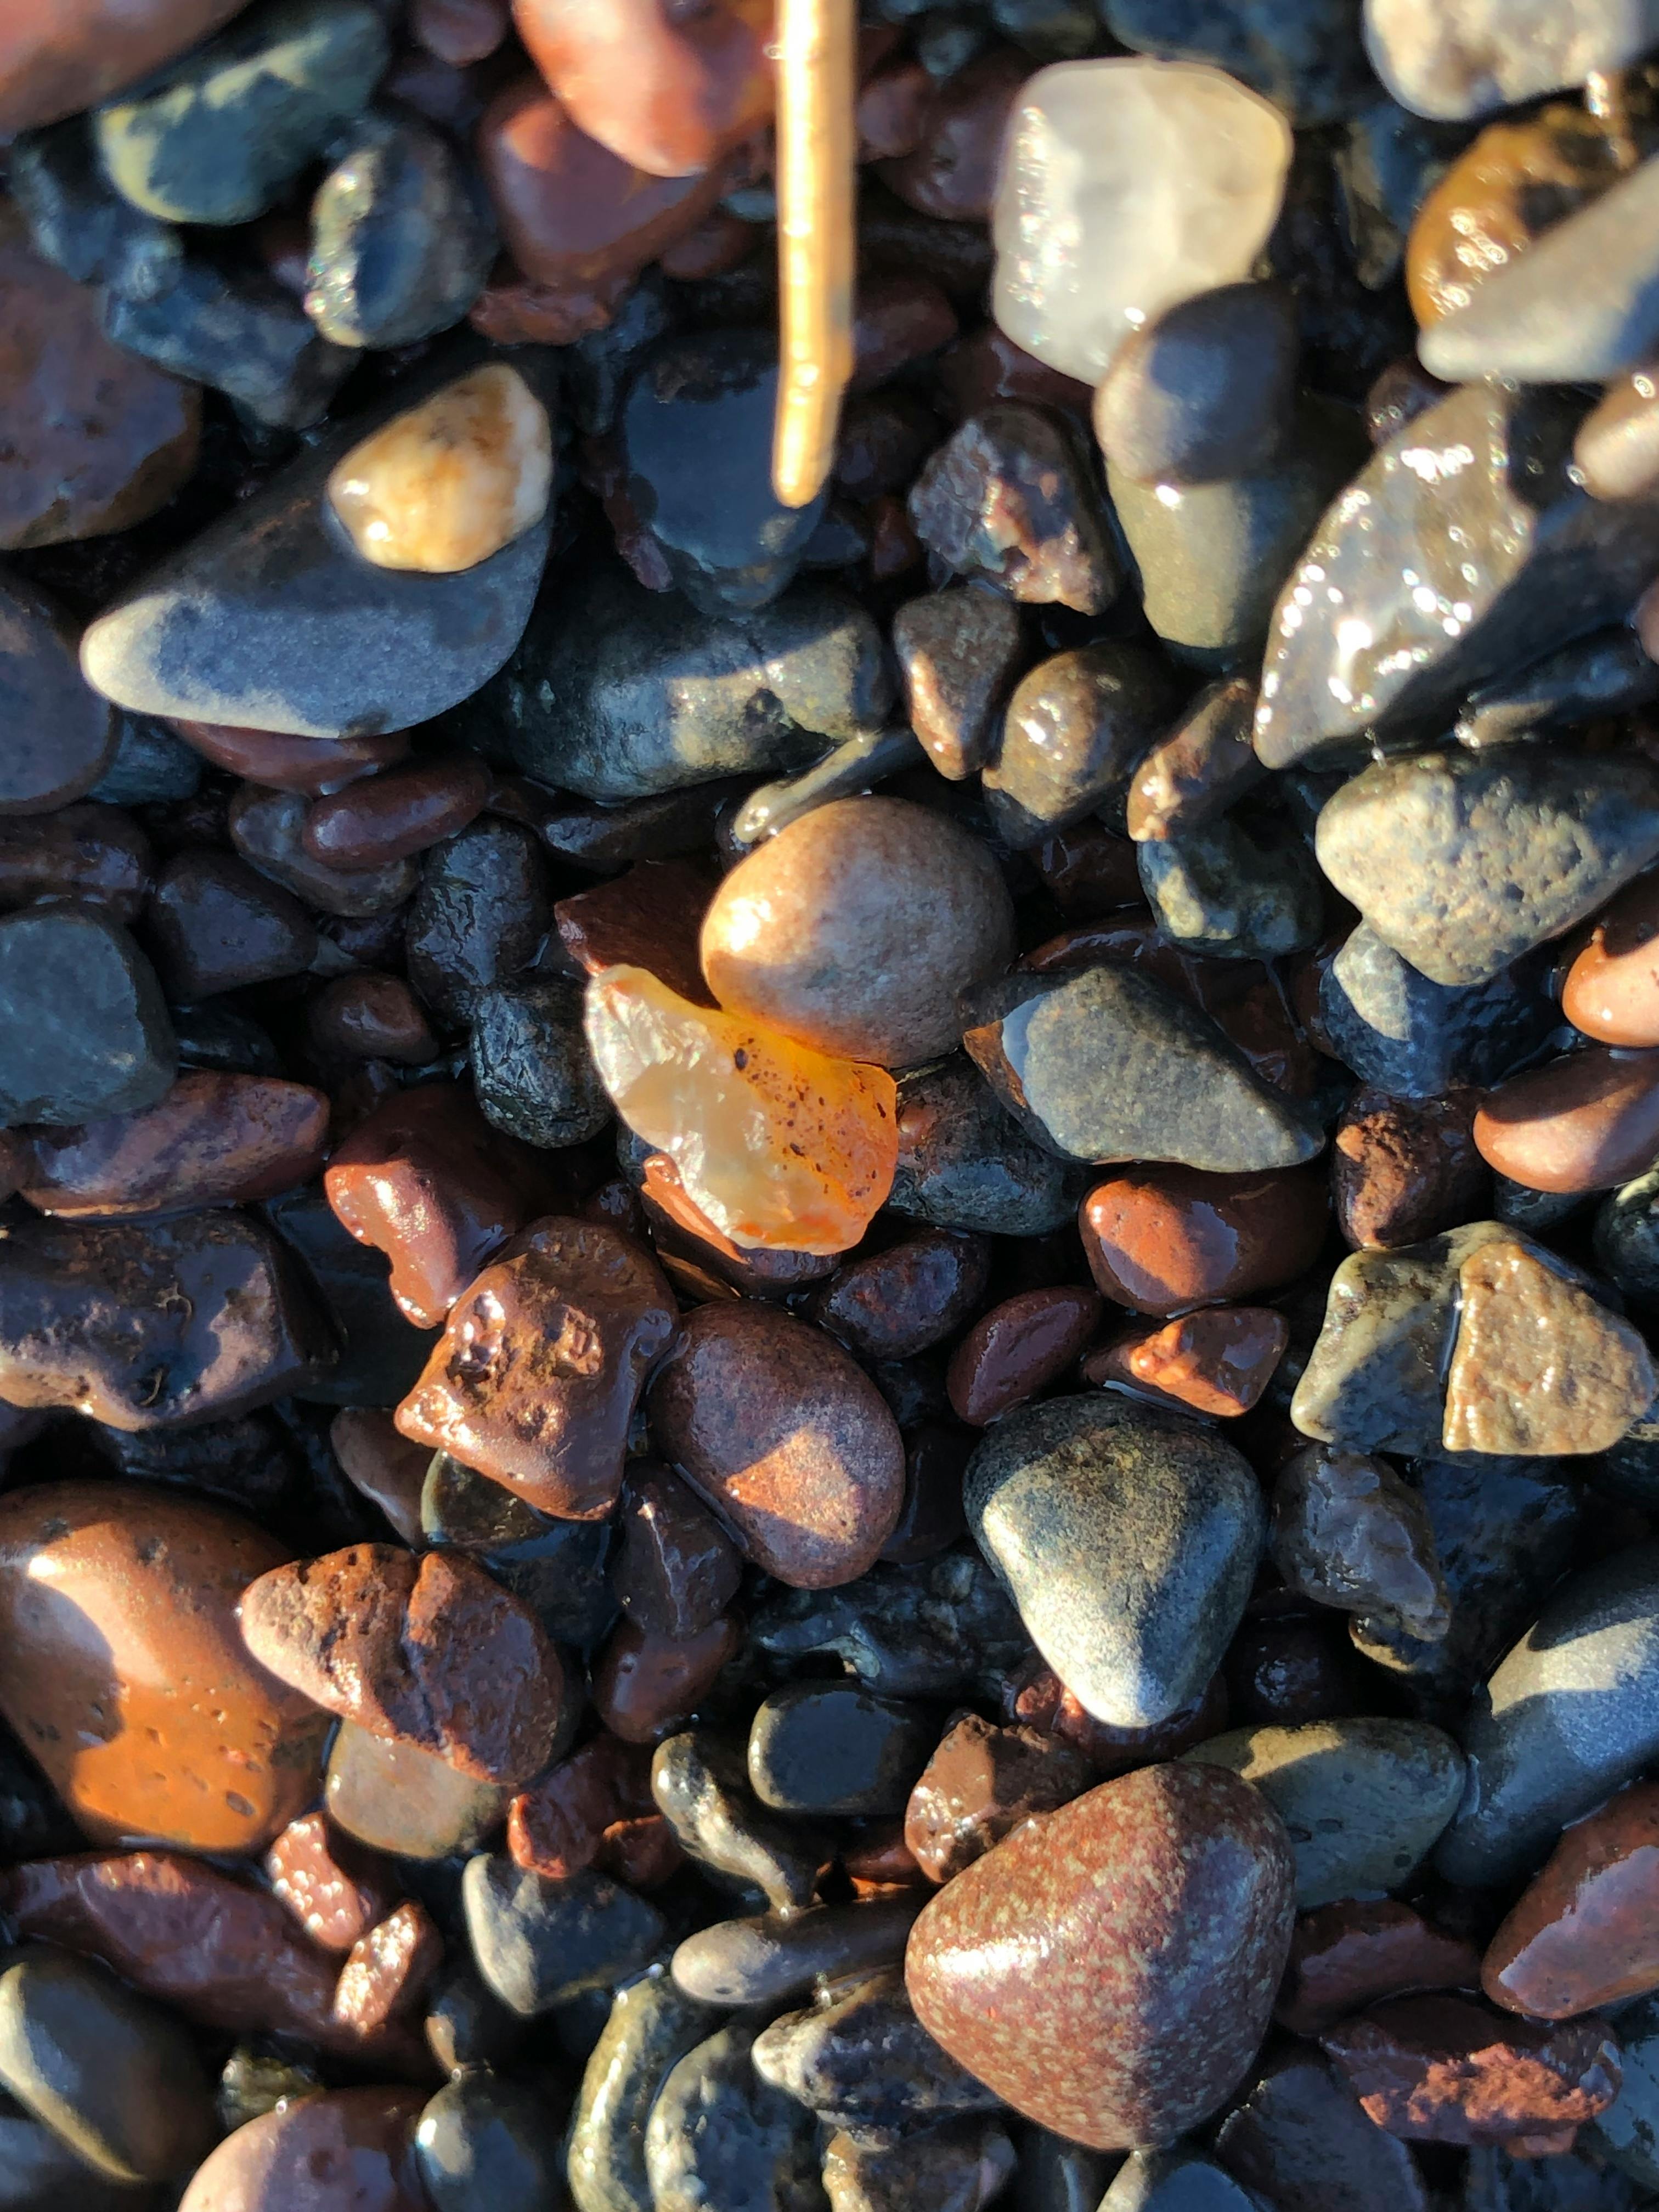 Free stock photo of Agates, lake rocks, sunset rocks